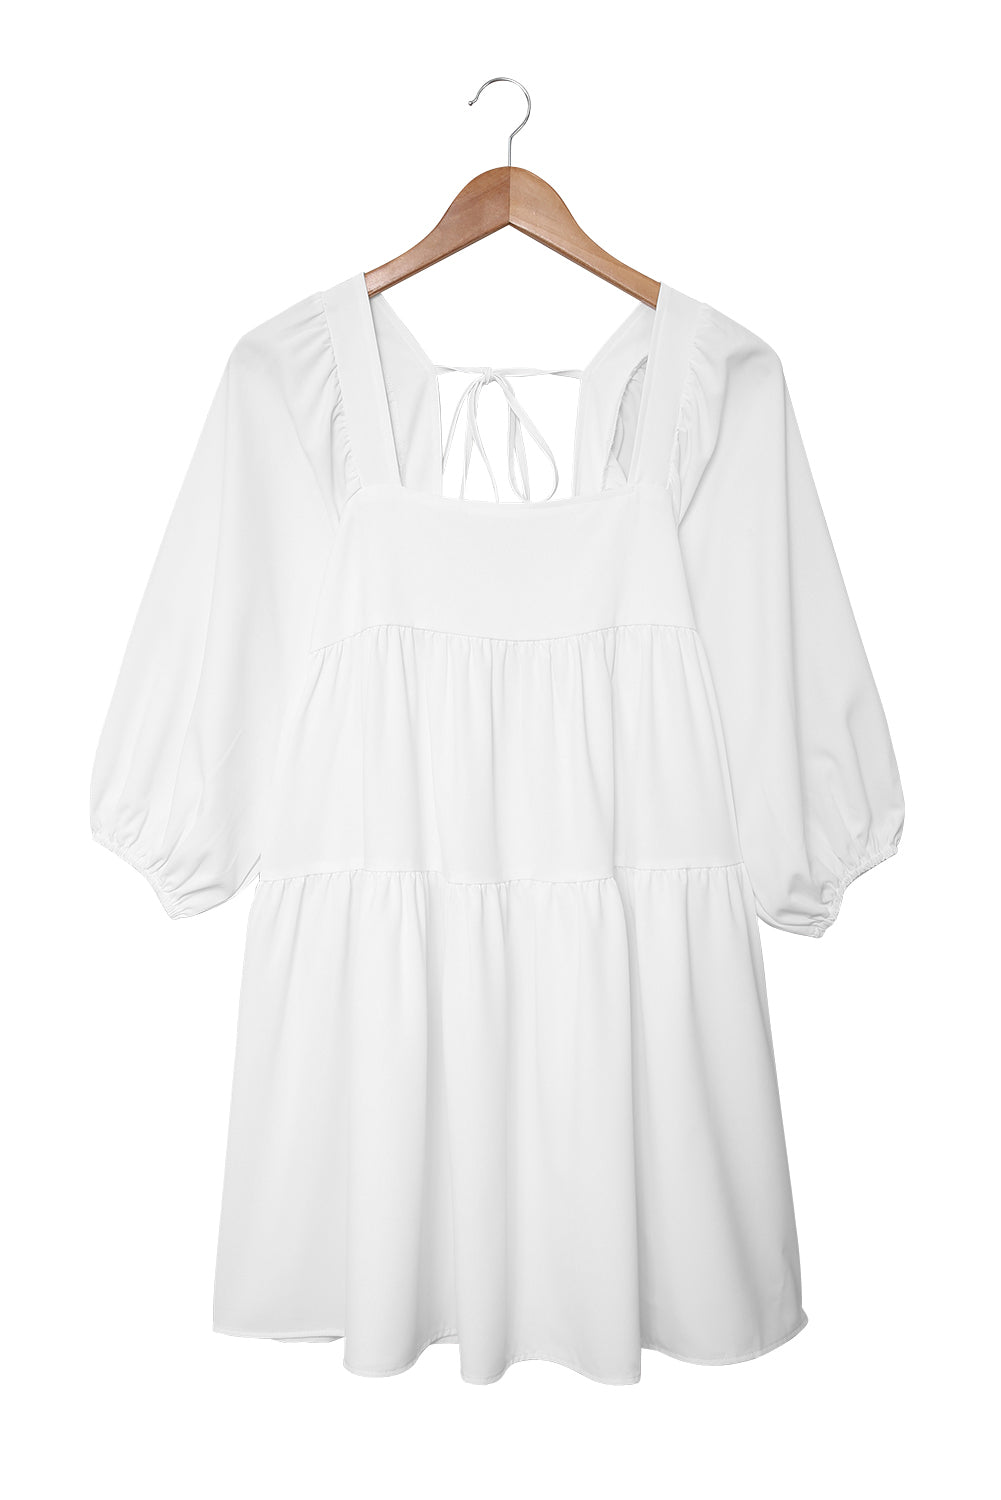 White Square Neck Half Sleeve High Low Mini Dress